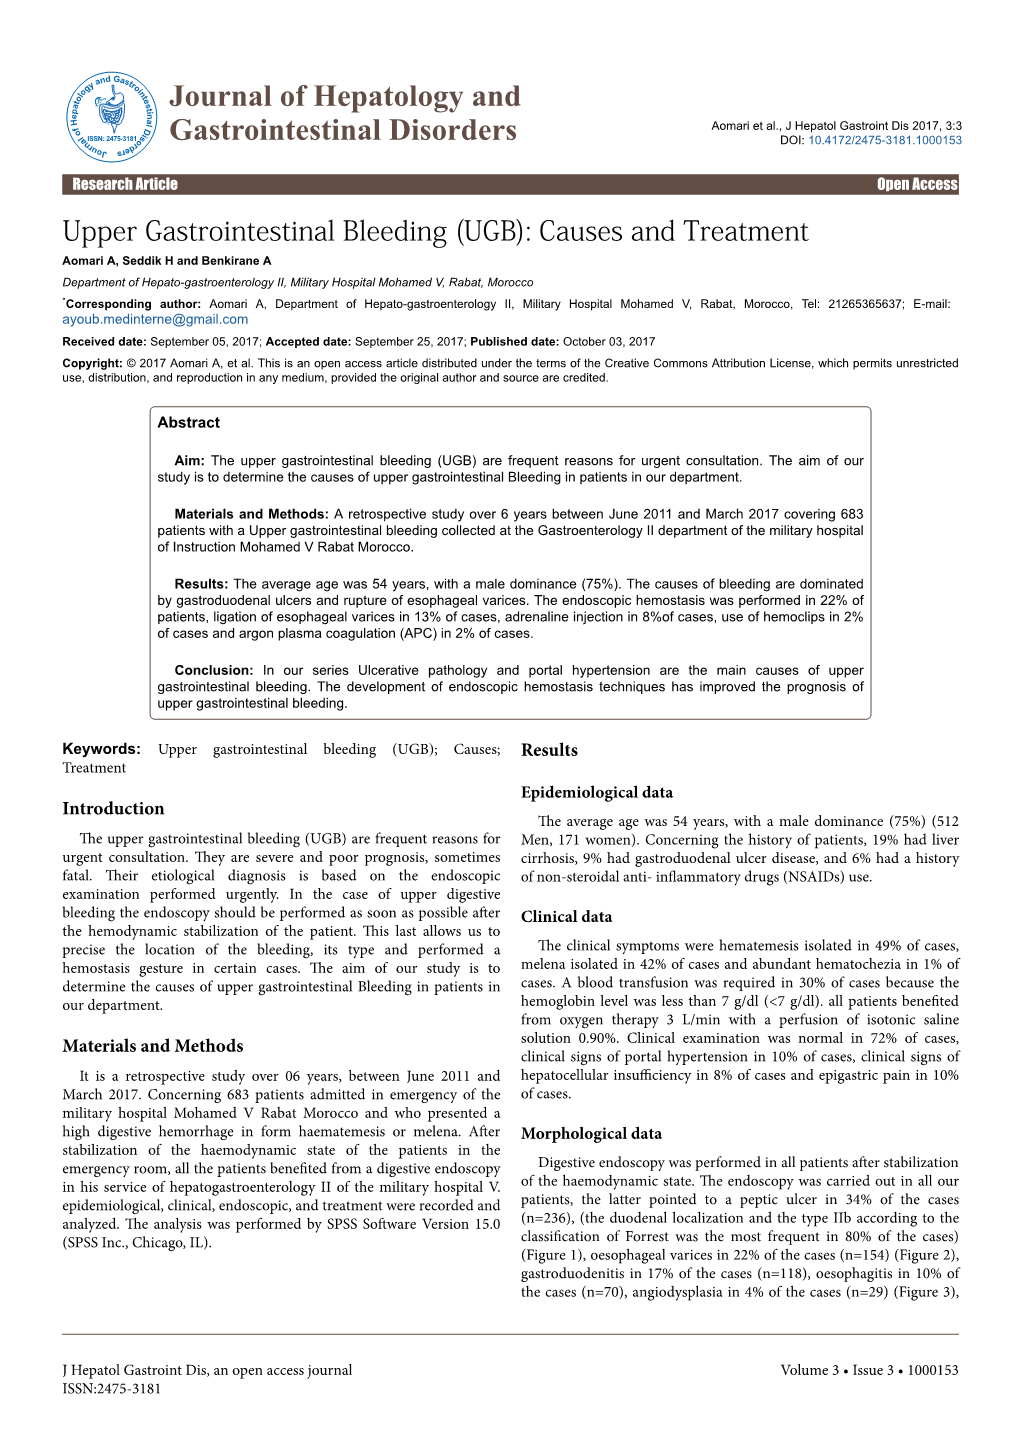 Upper Gastrointestinal Bleeding (UGB): Causes and Treatment